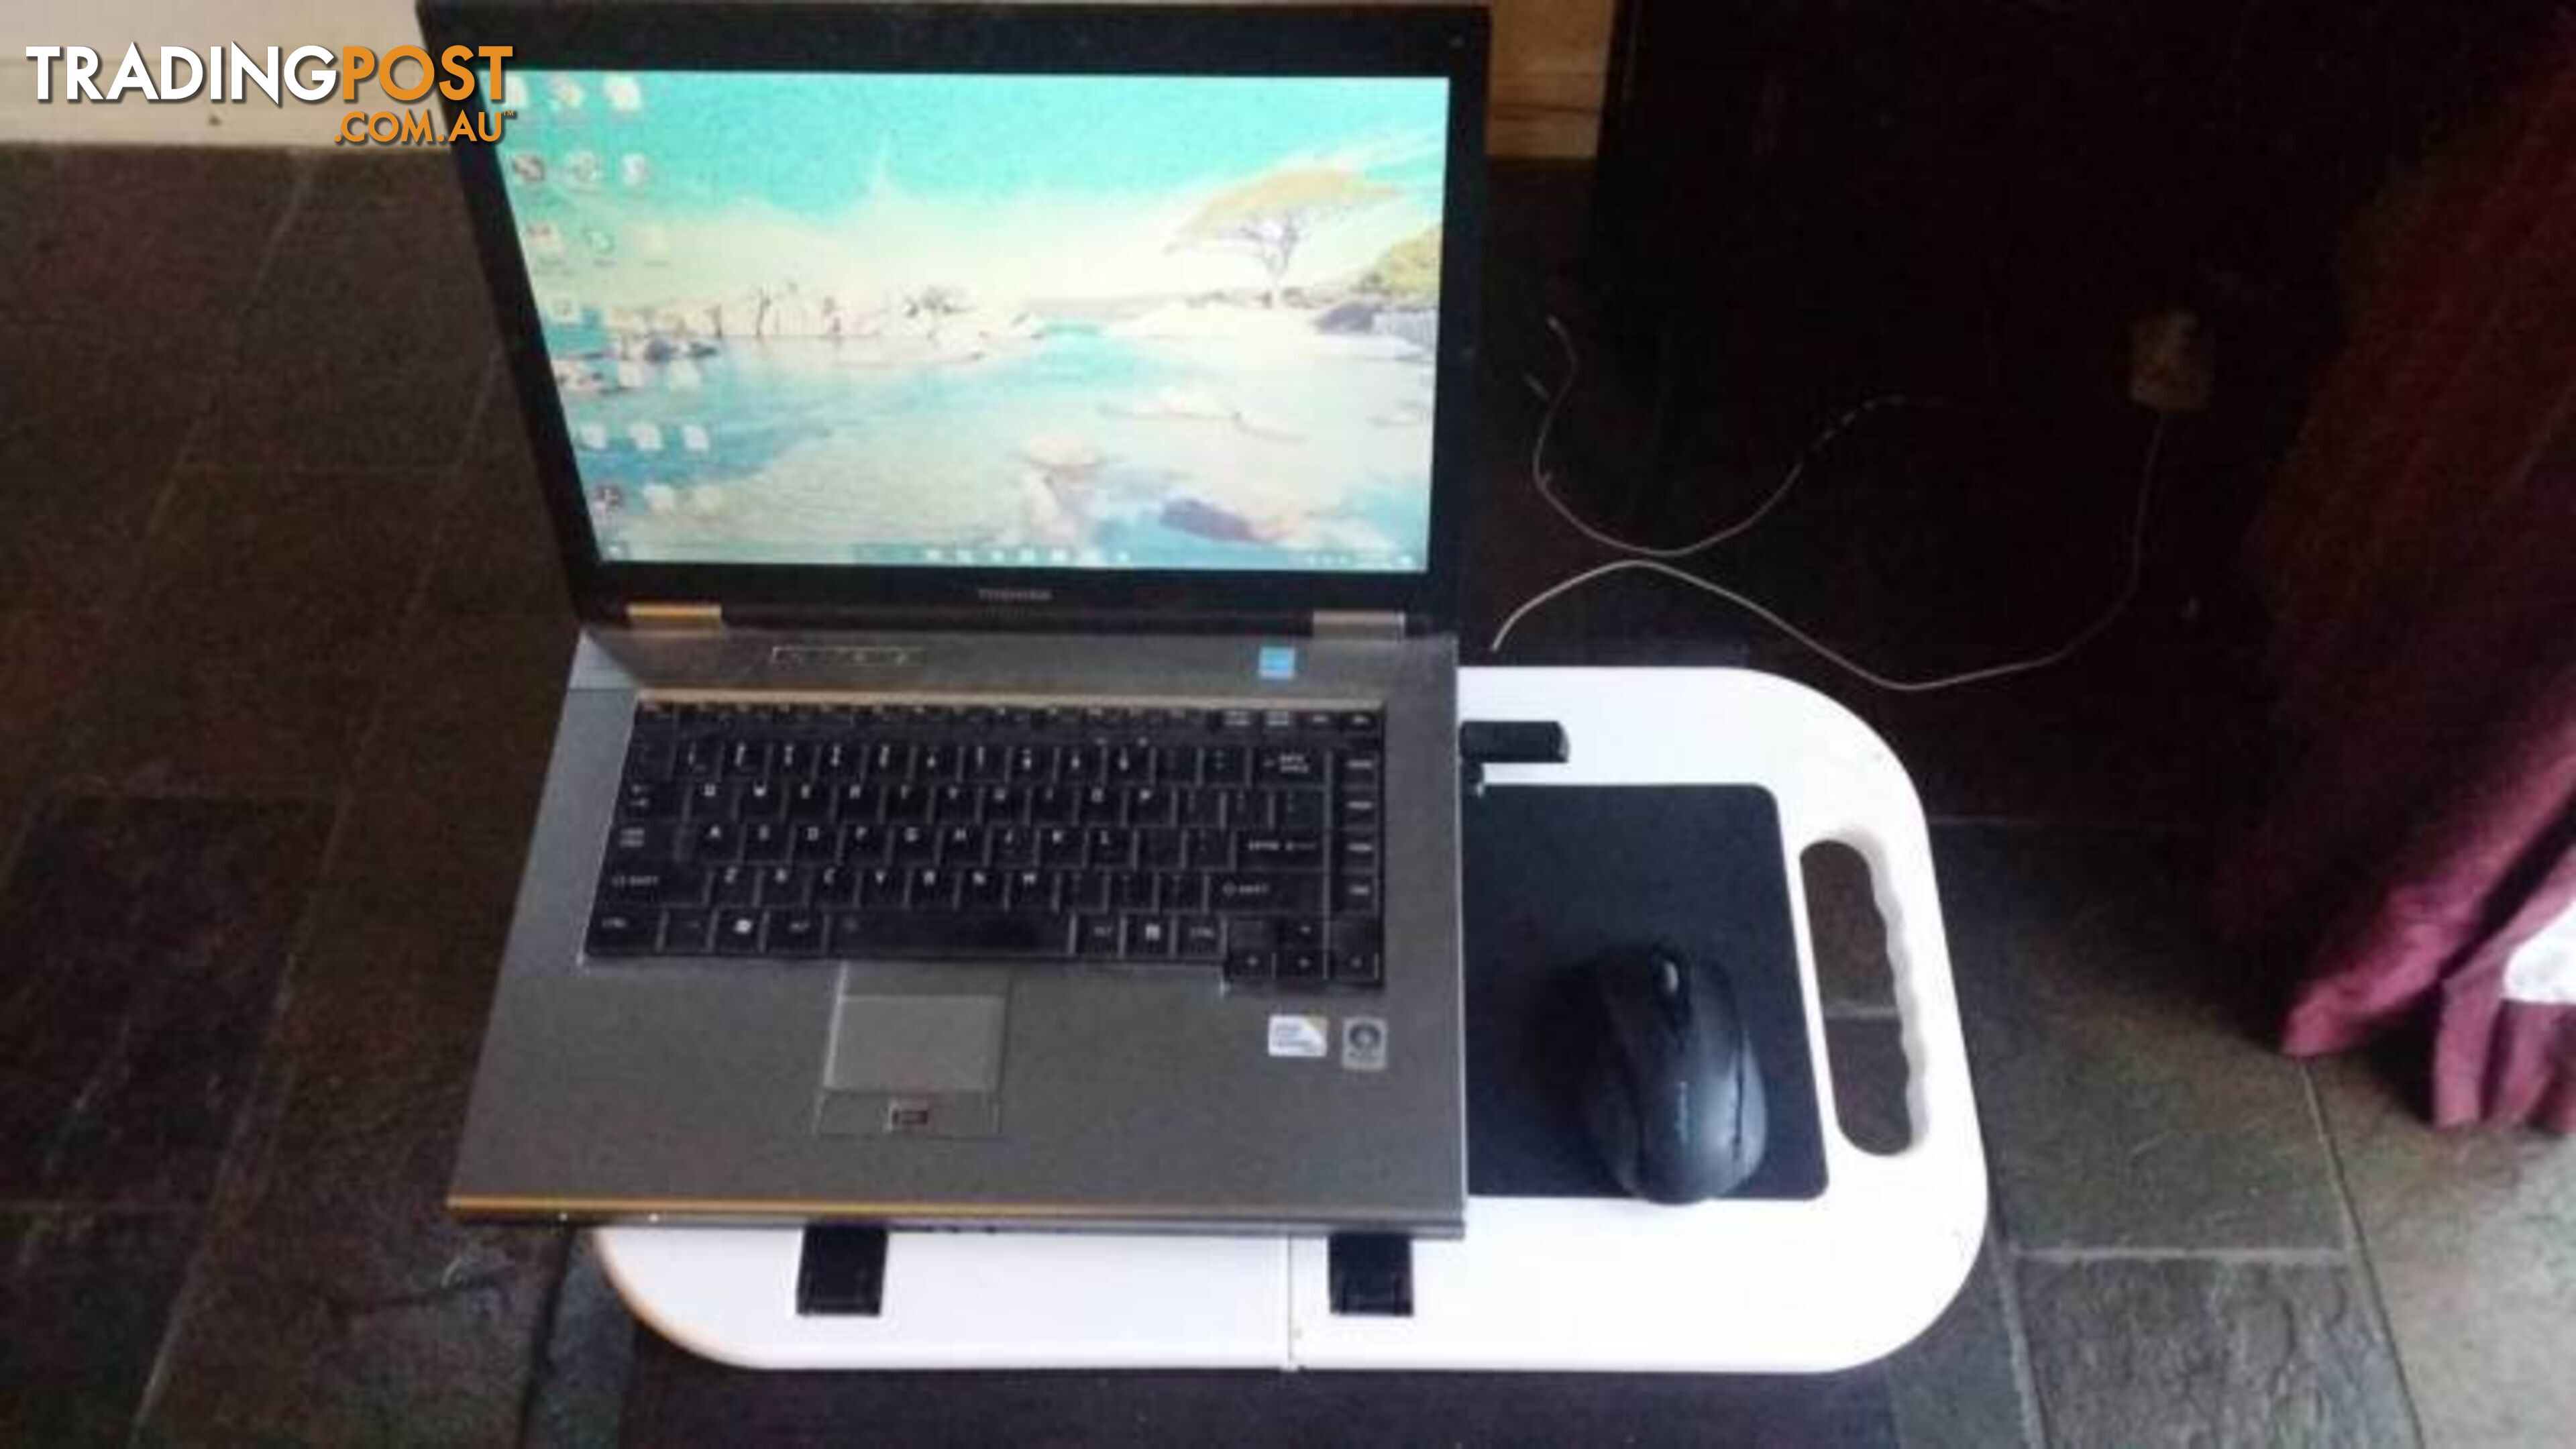 Ipad / Tablet / Laptop / Notepad Adjustable Stand